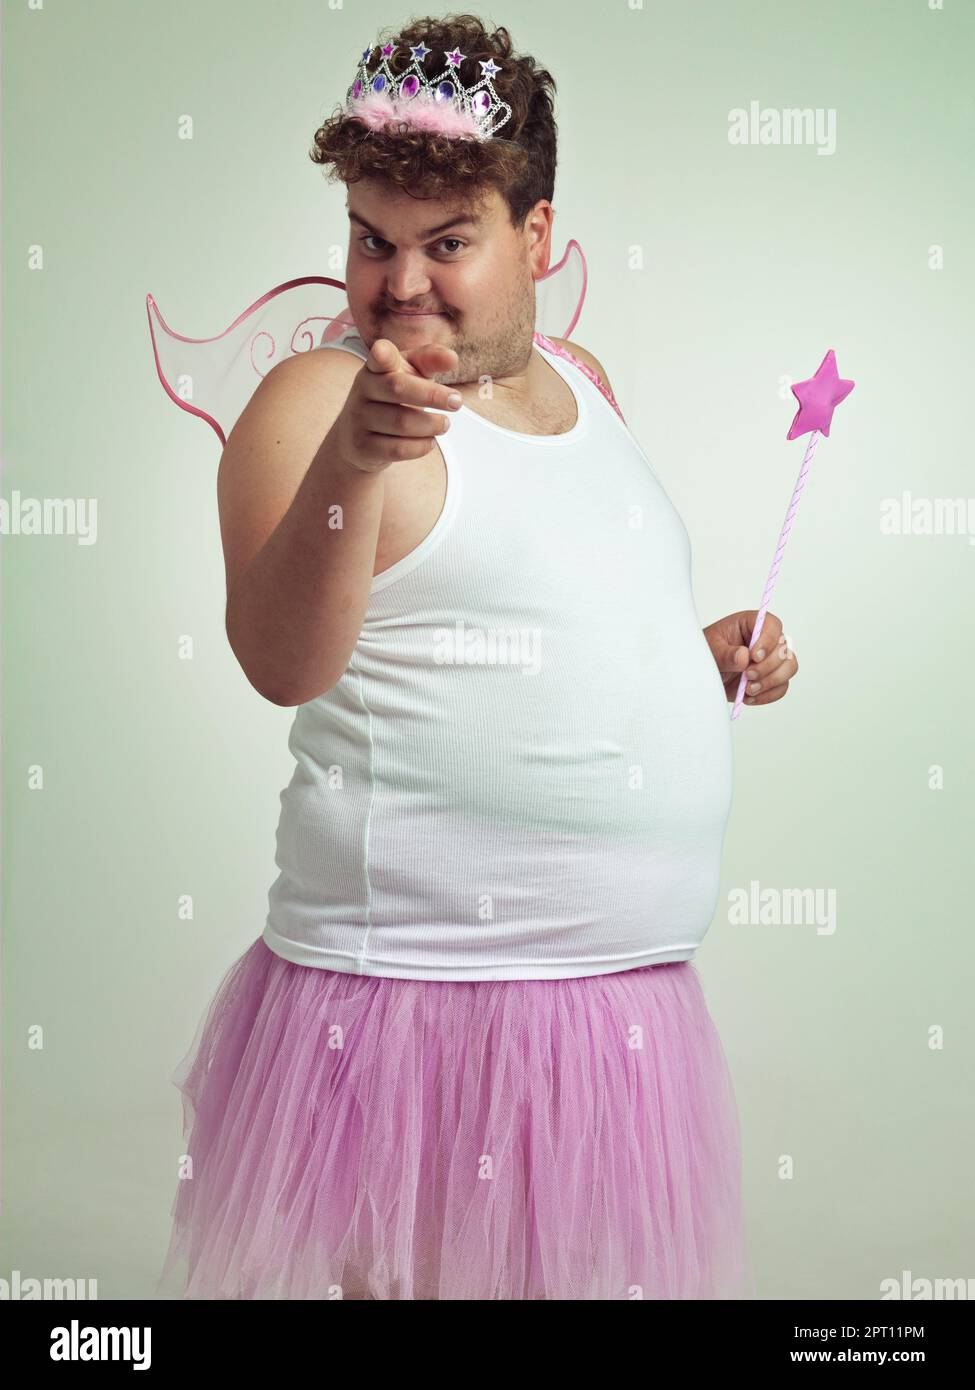 A goofy movie fat lady cosplay